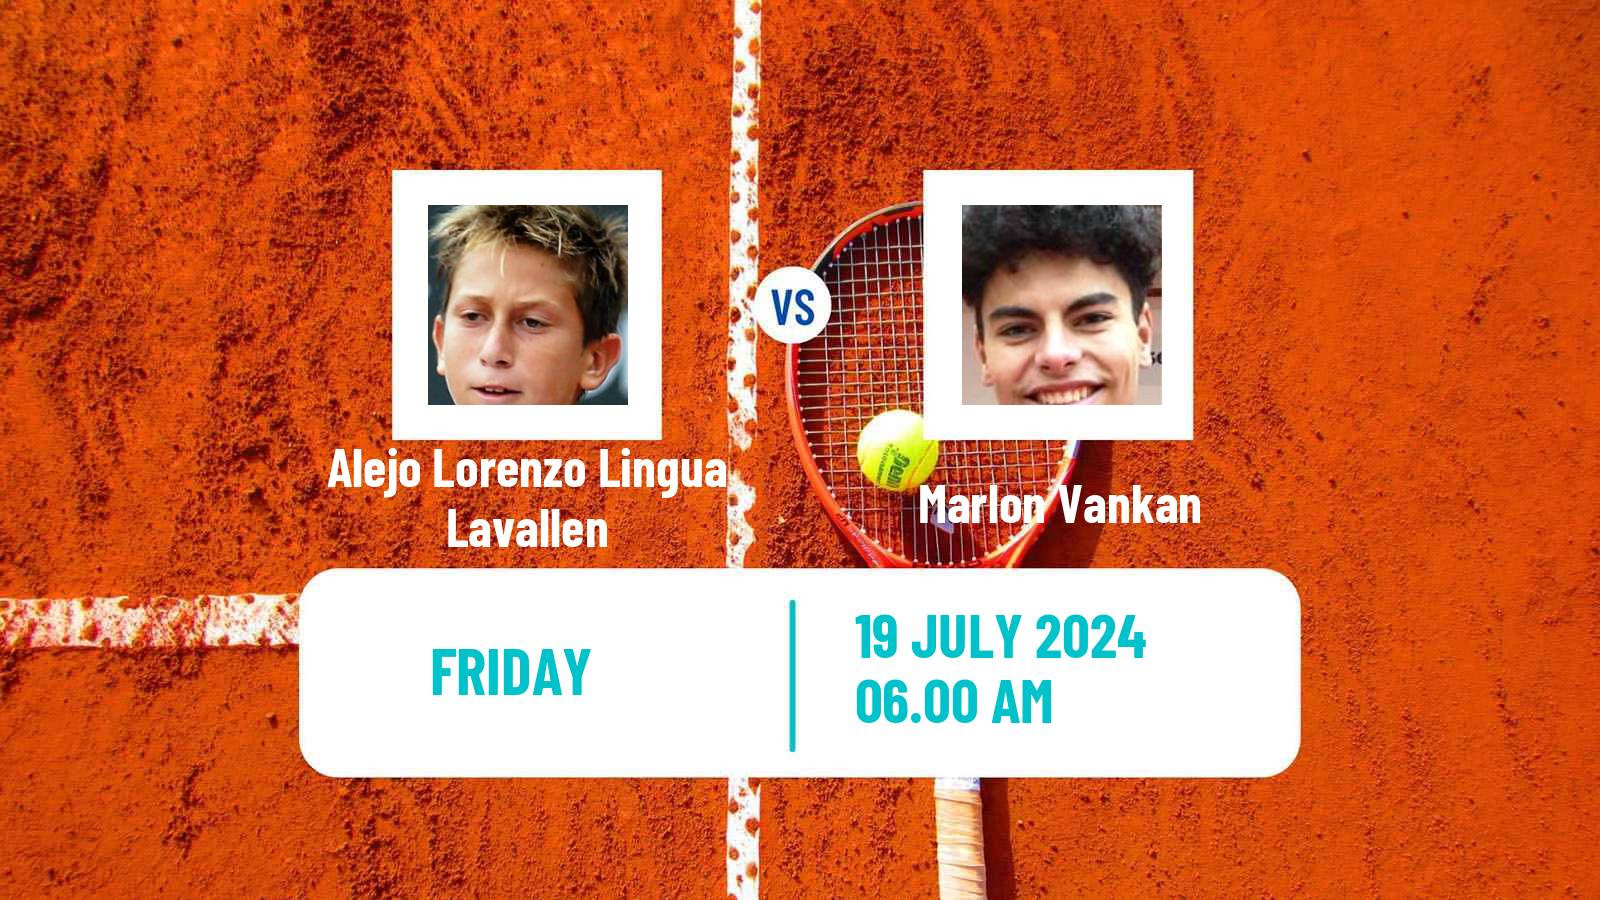 Tennis ITF M25 Esch Alzette 2 Men Alejo Lorenzo Lingua Lavallen - Marlon Vankan